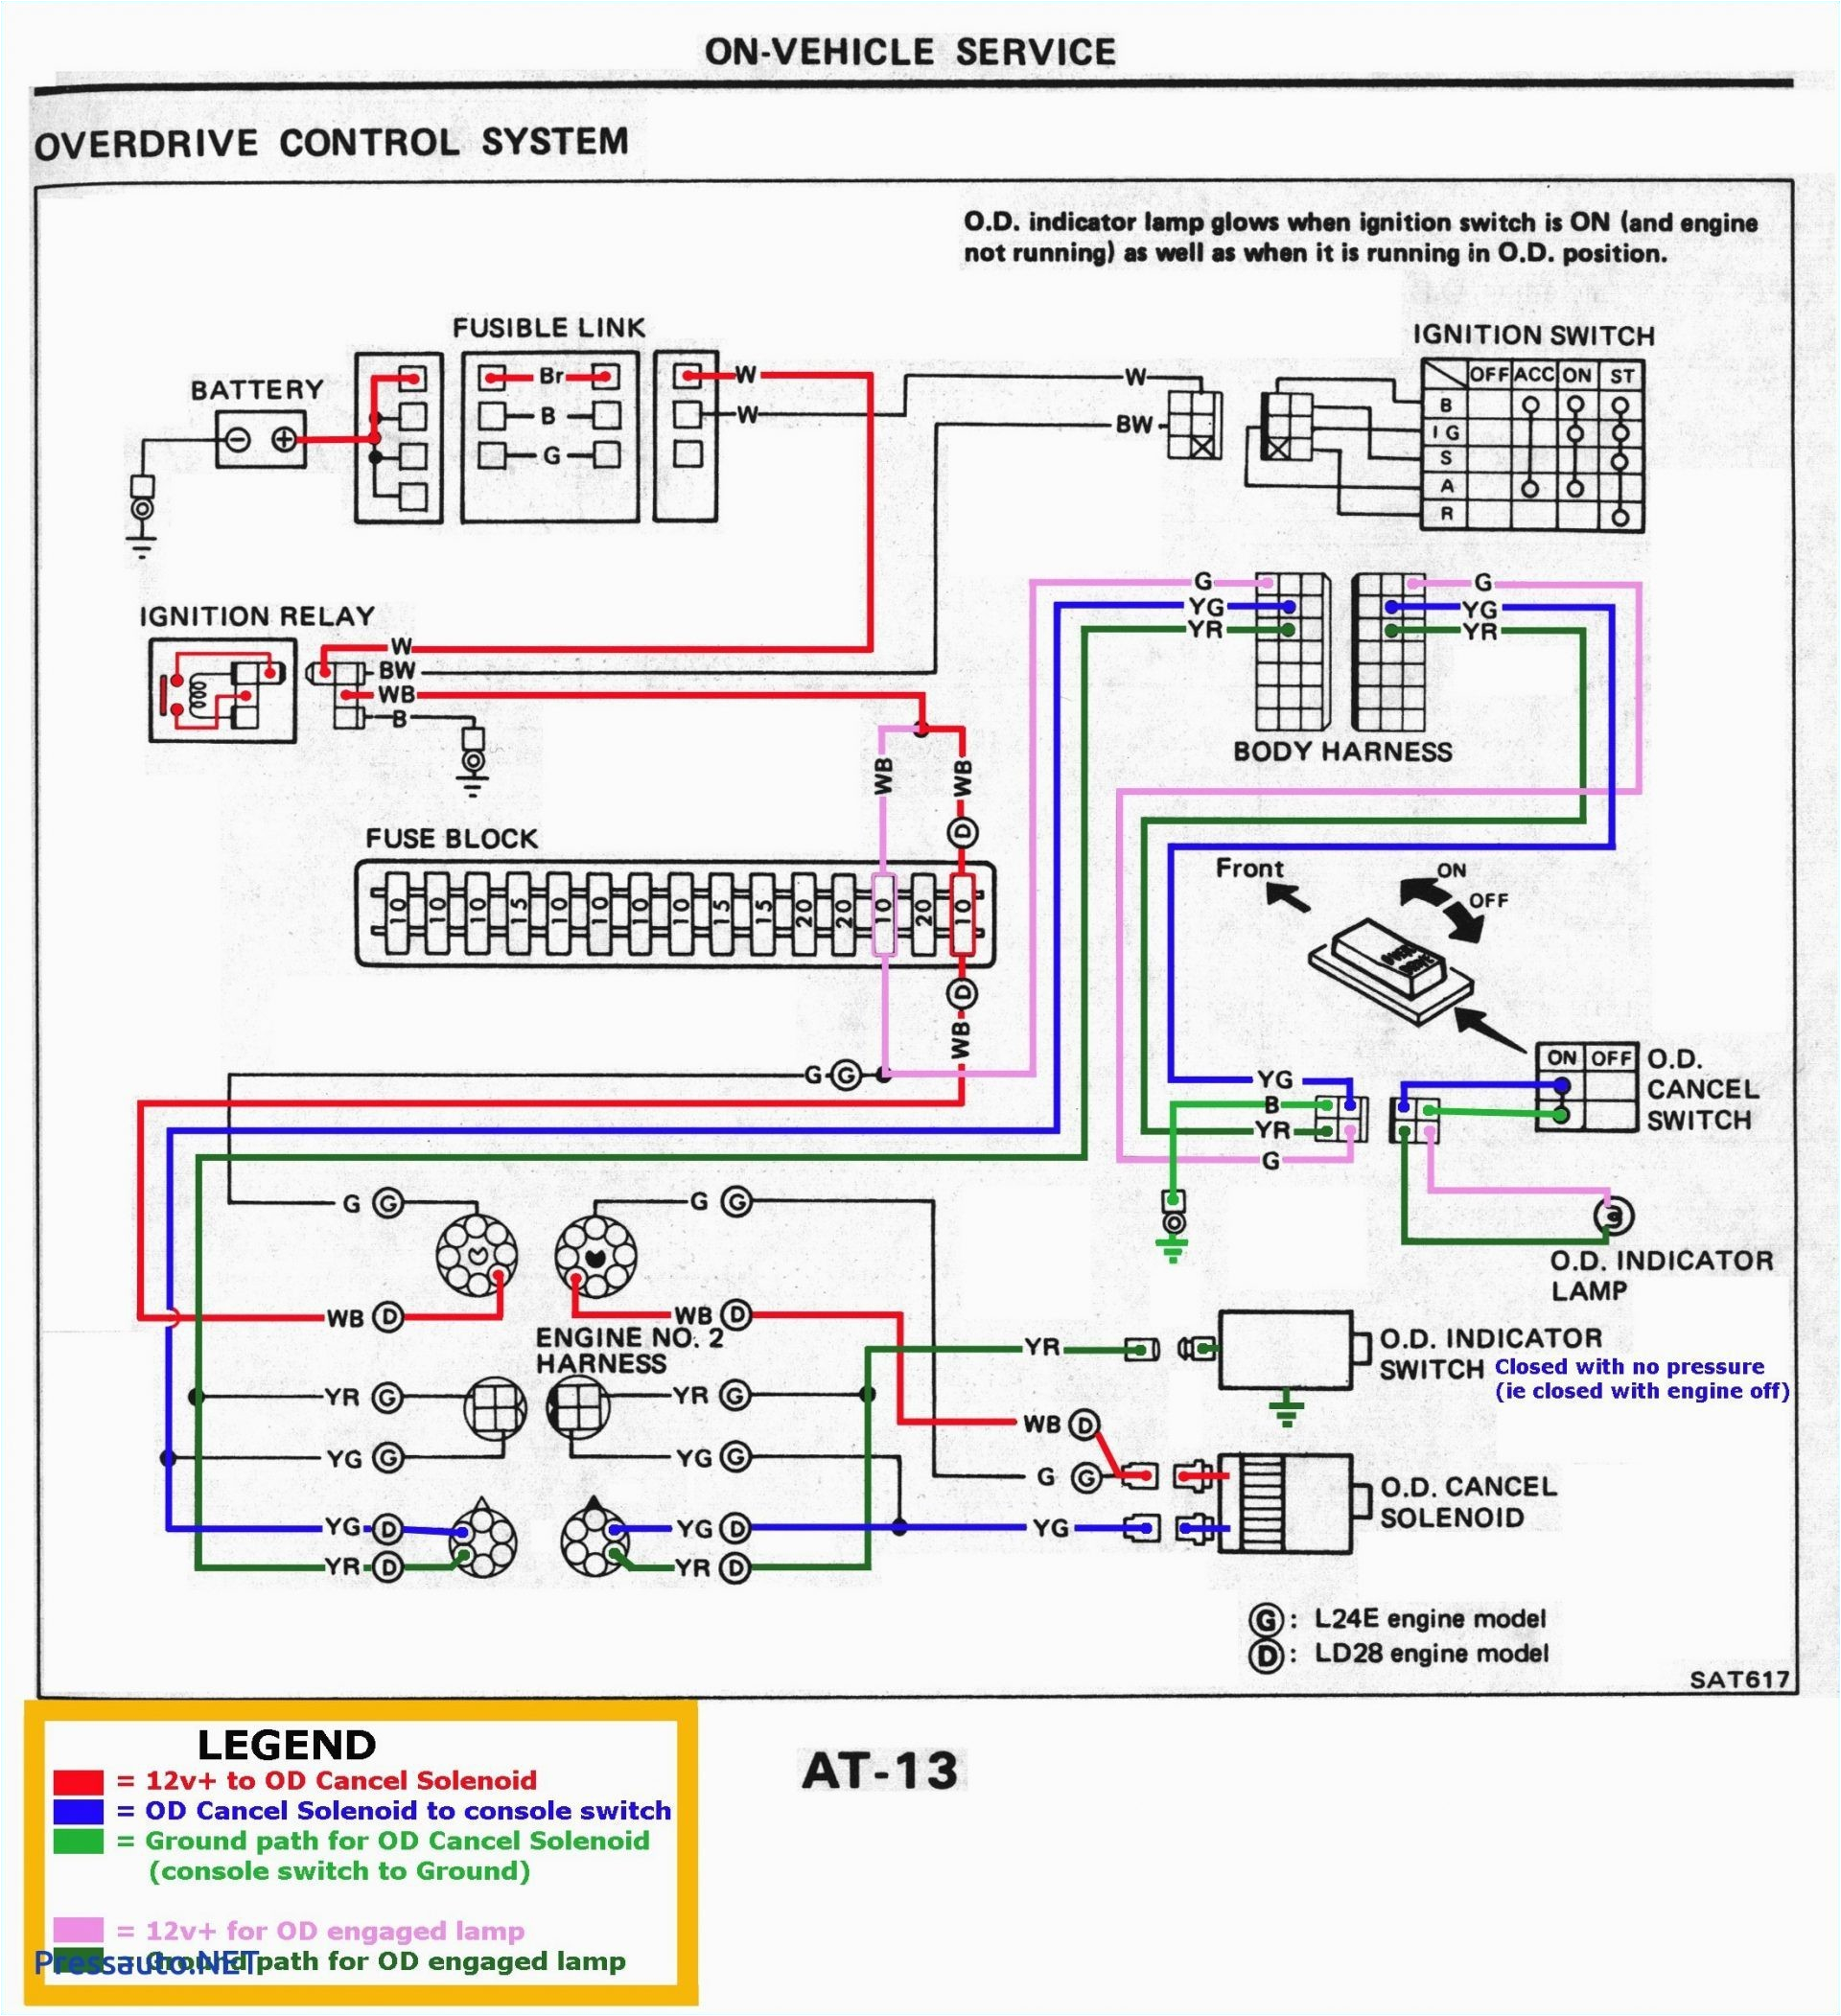 iv 2 wiring diagram h it wiring diagram repair guide bs2 wiring diagram schema diagram previewbs2